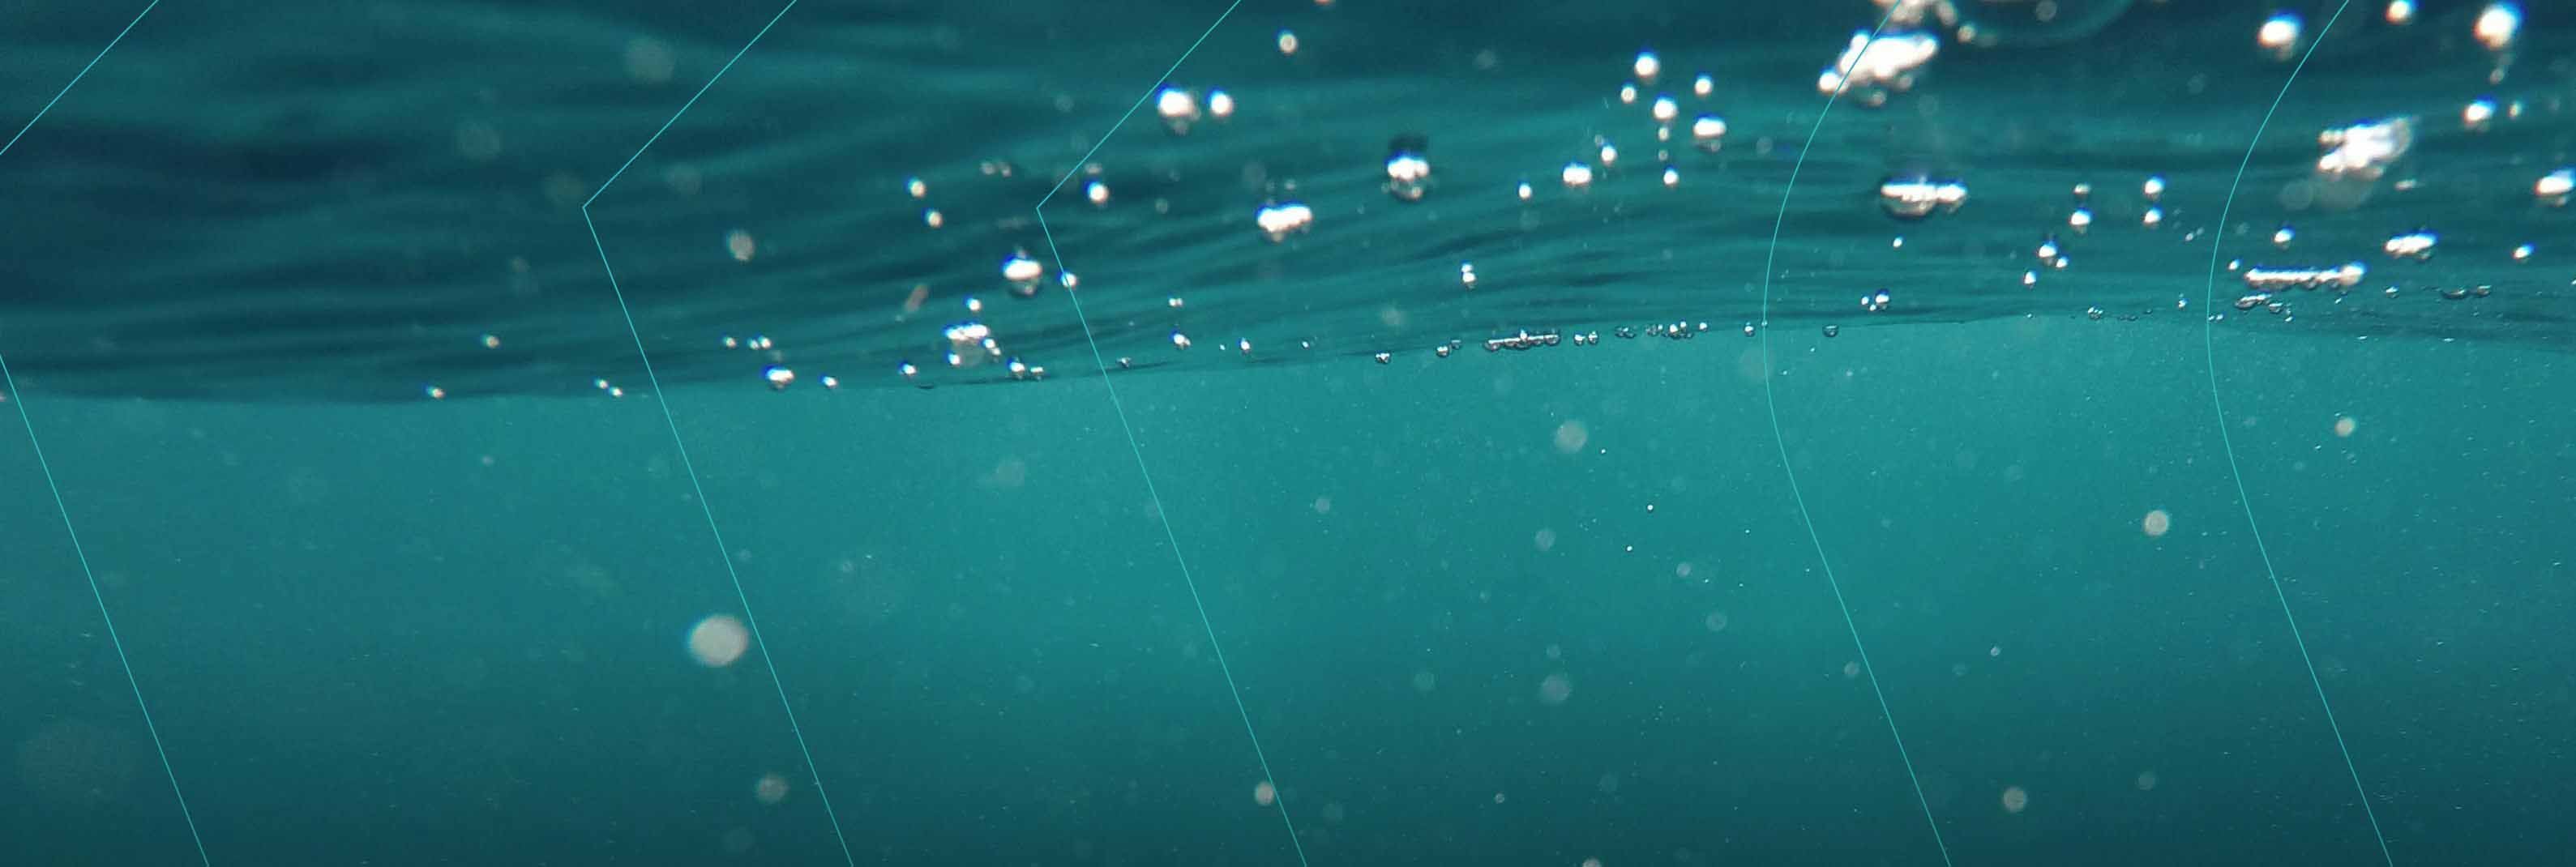 mikroplast-i-havet